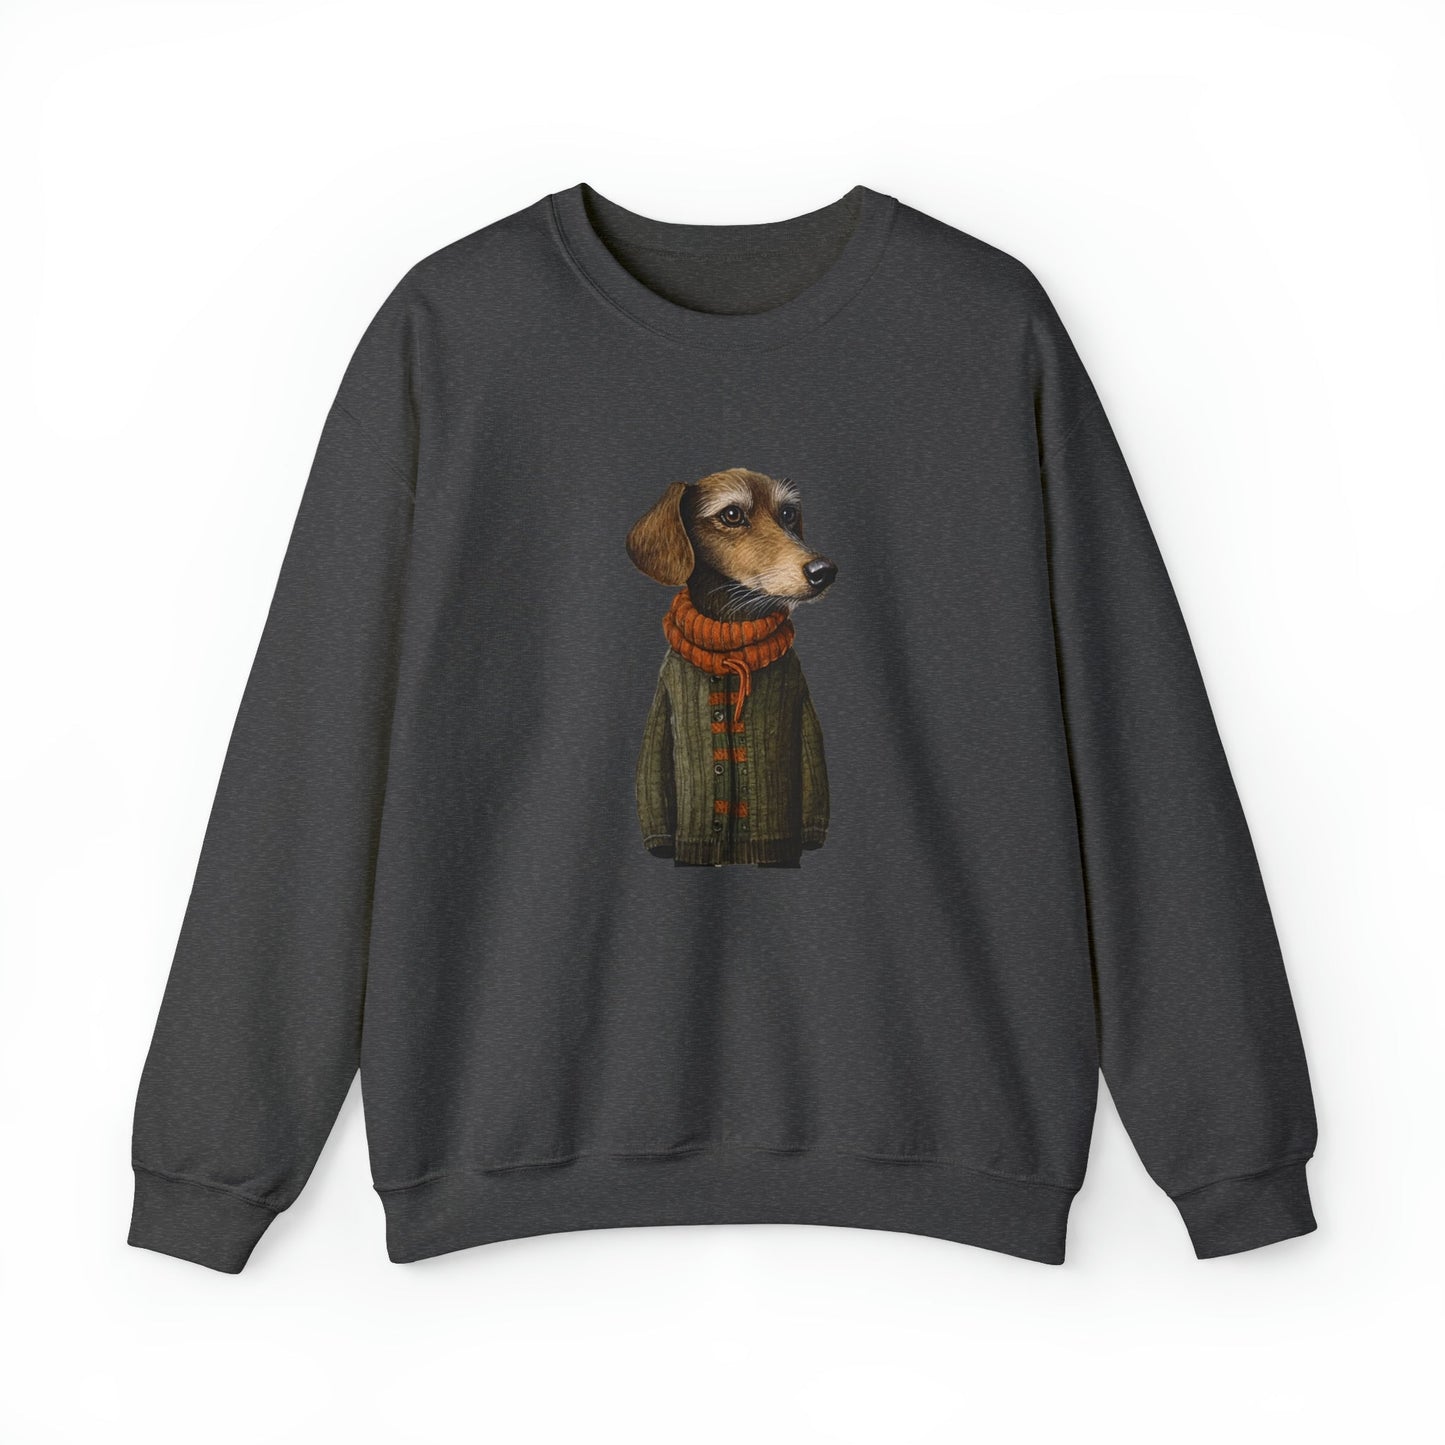 Dachshund Dog Sweatshirt, Whimsical Dogs in Sweaters Unique Boho Shirt - FlooredByArt